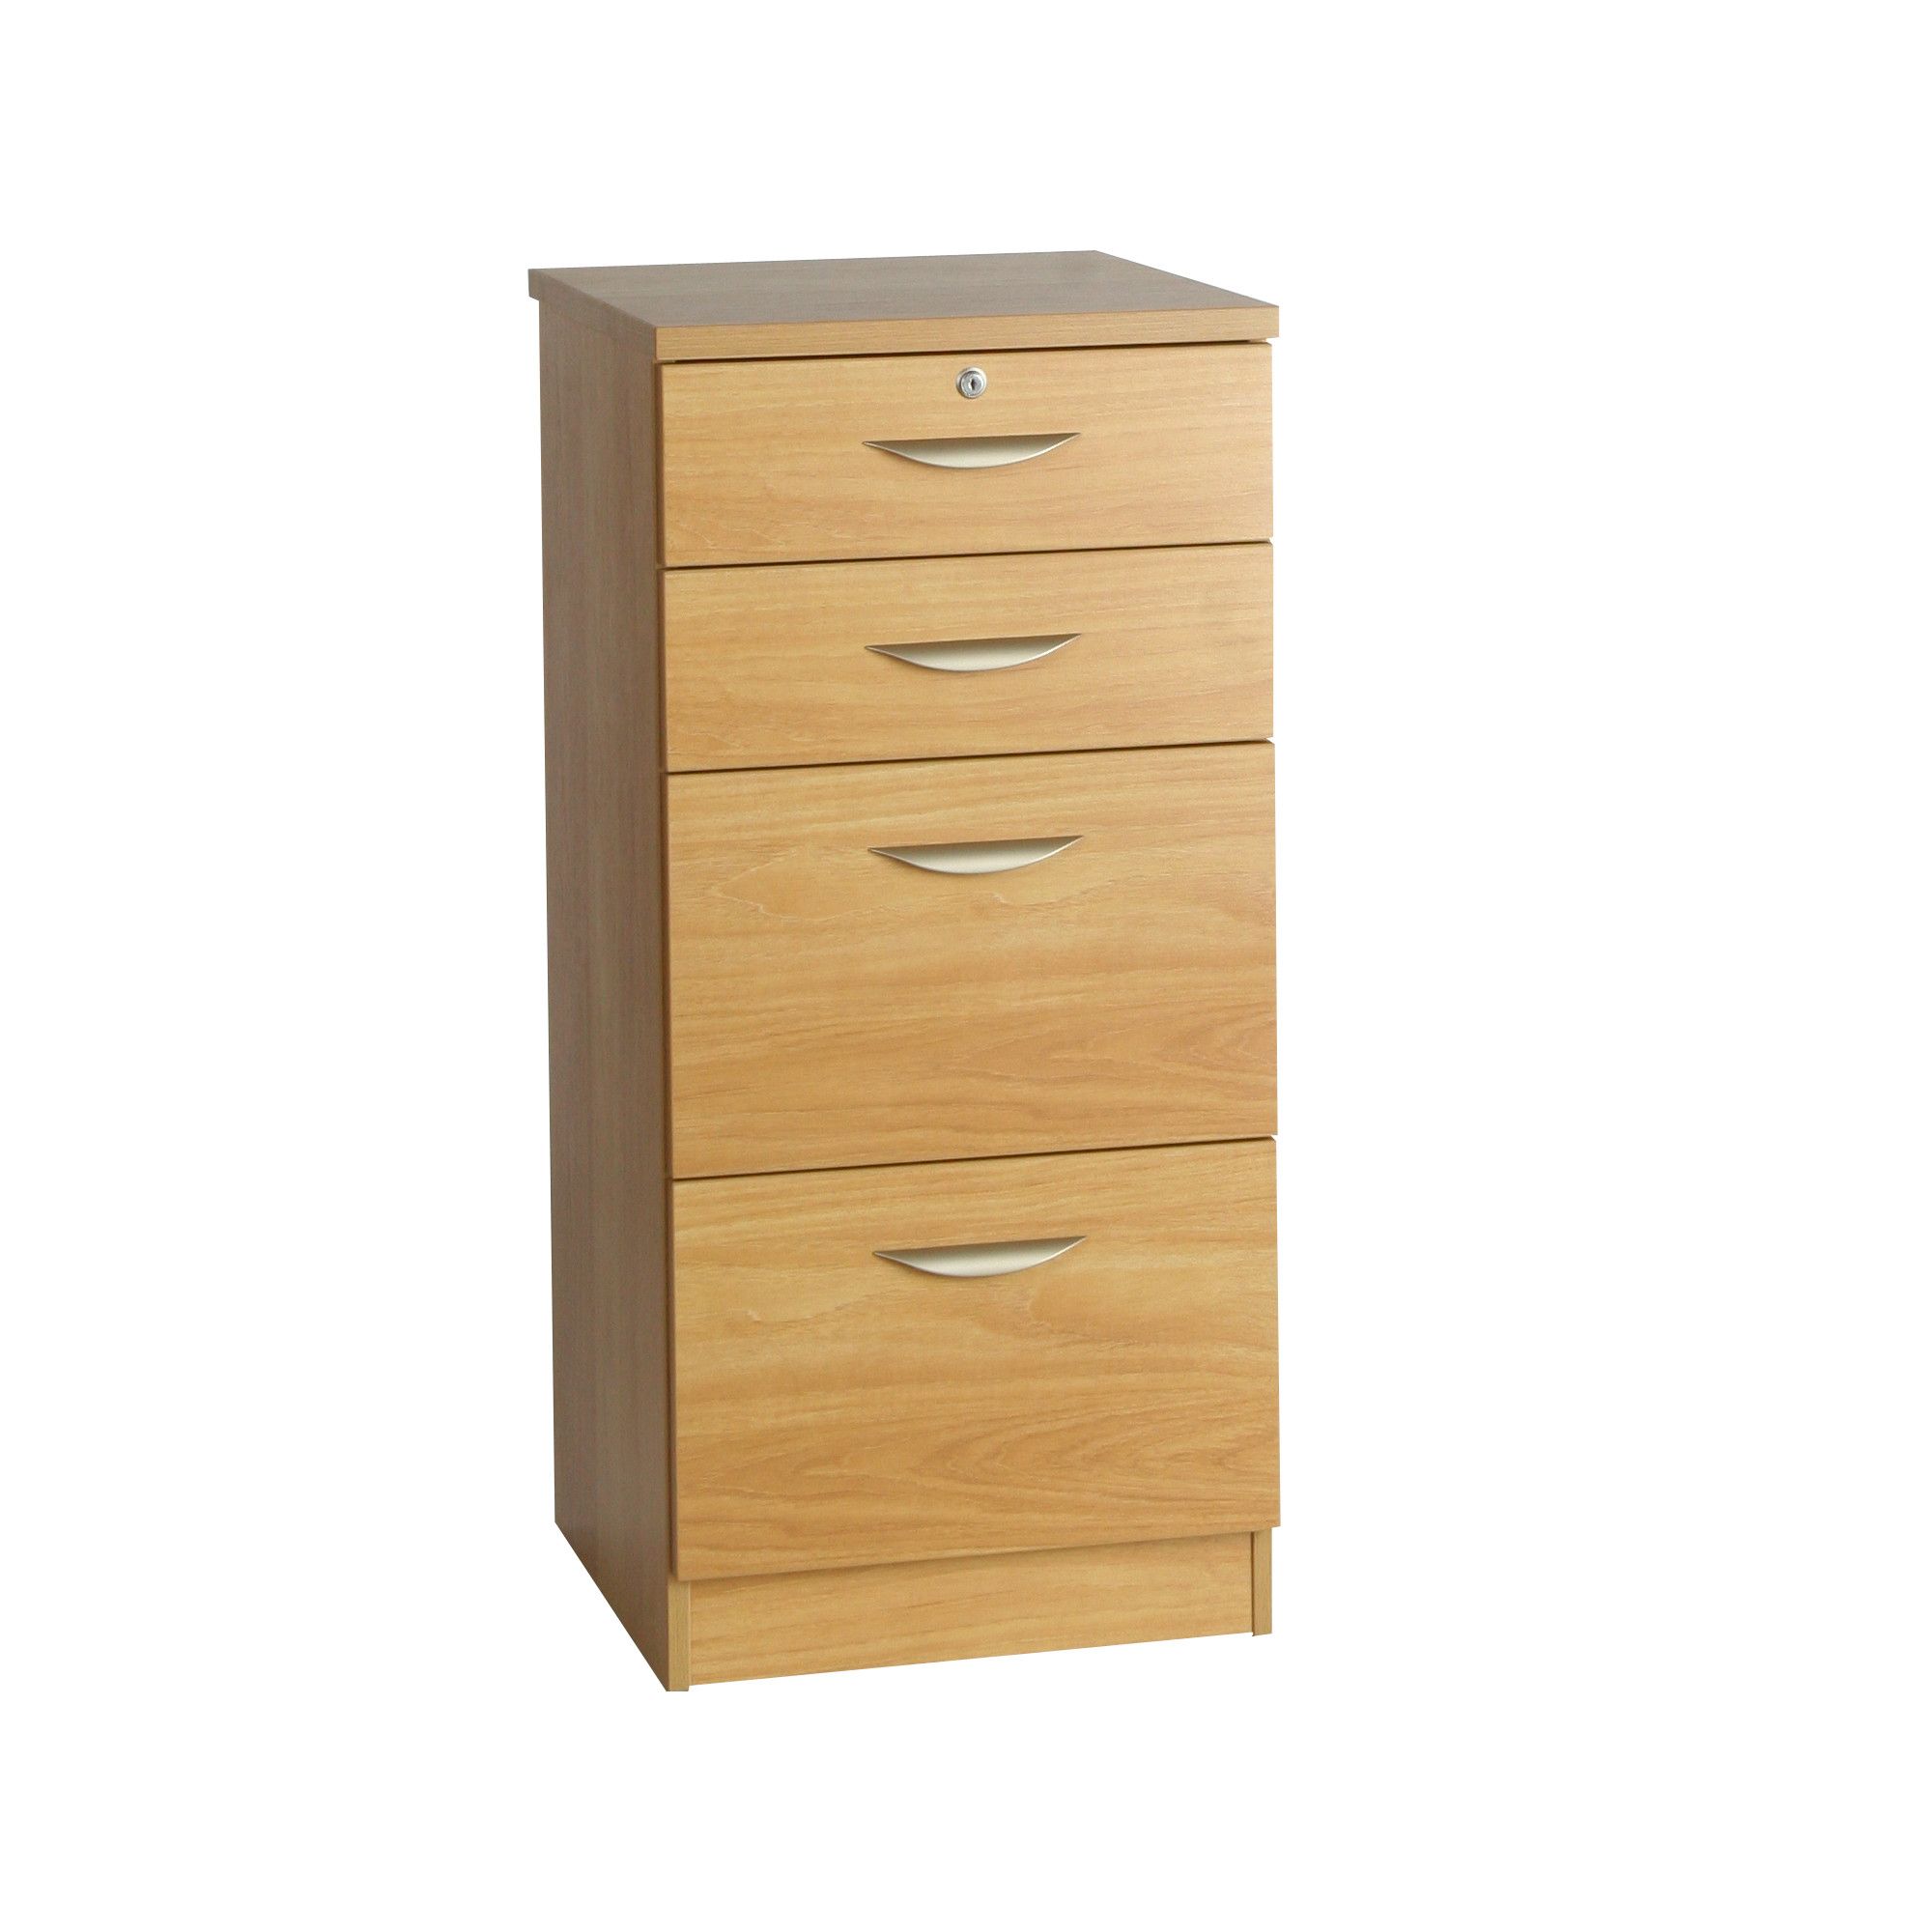 Enduro Four Drawer Tall Wooden Filing Cabinet - Warm Oak at Tesco Direct